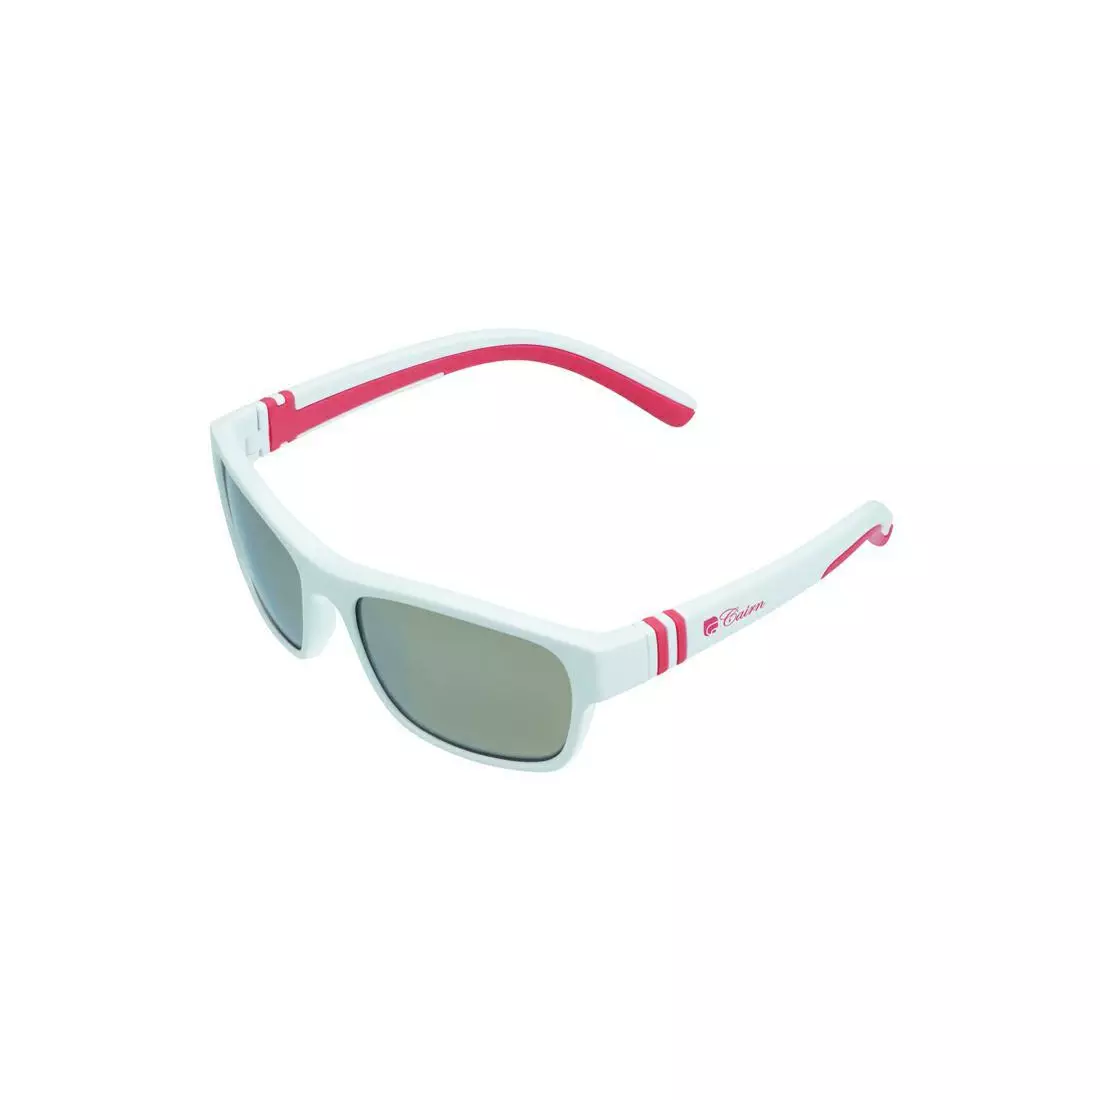 CAIRN ochelari sport pentru copii KIWI J white/pink JLKIWI101